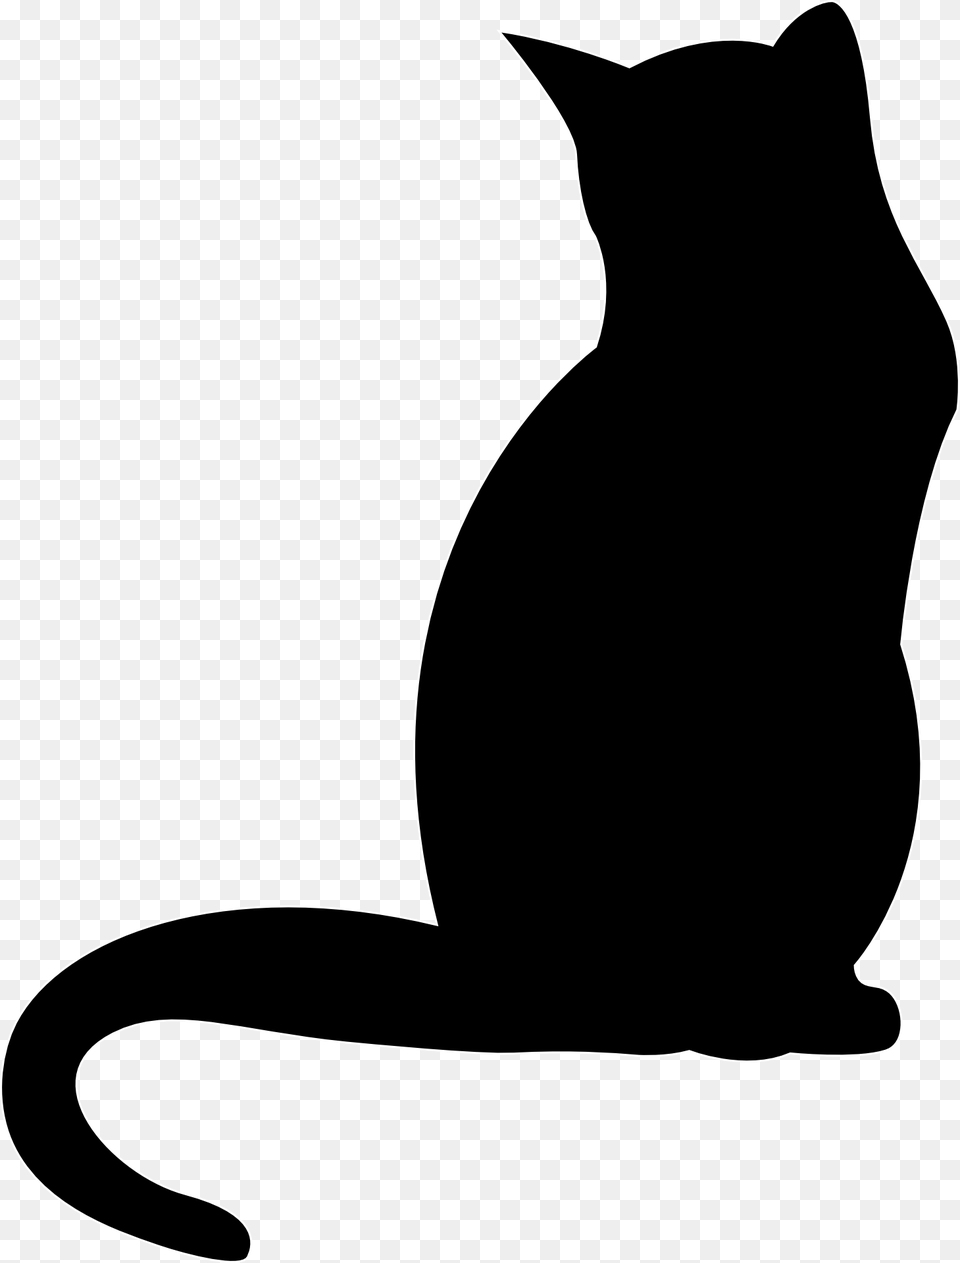 Black Cat Kitten Polydactyl Cat Clip Art Vector Black Cat, Silhouette, Animal, Mammal, Pet Png